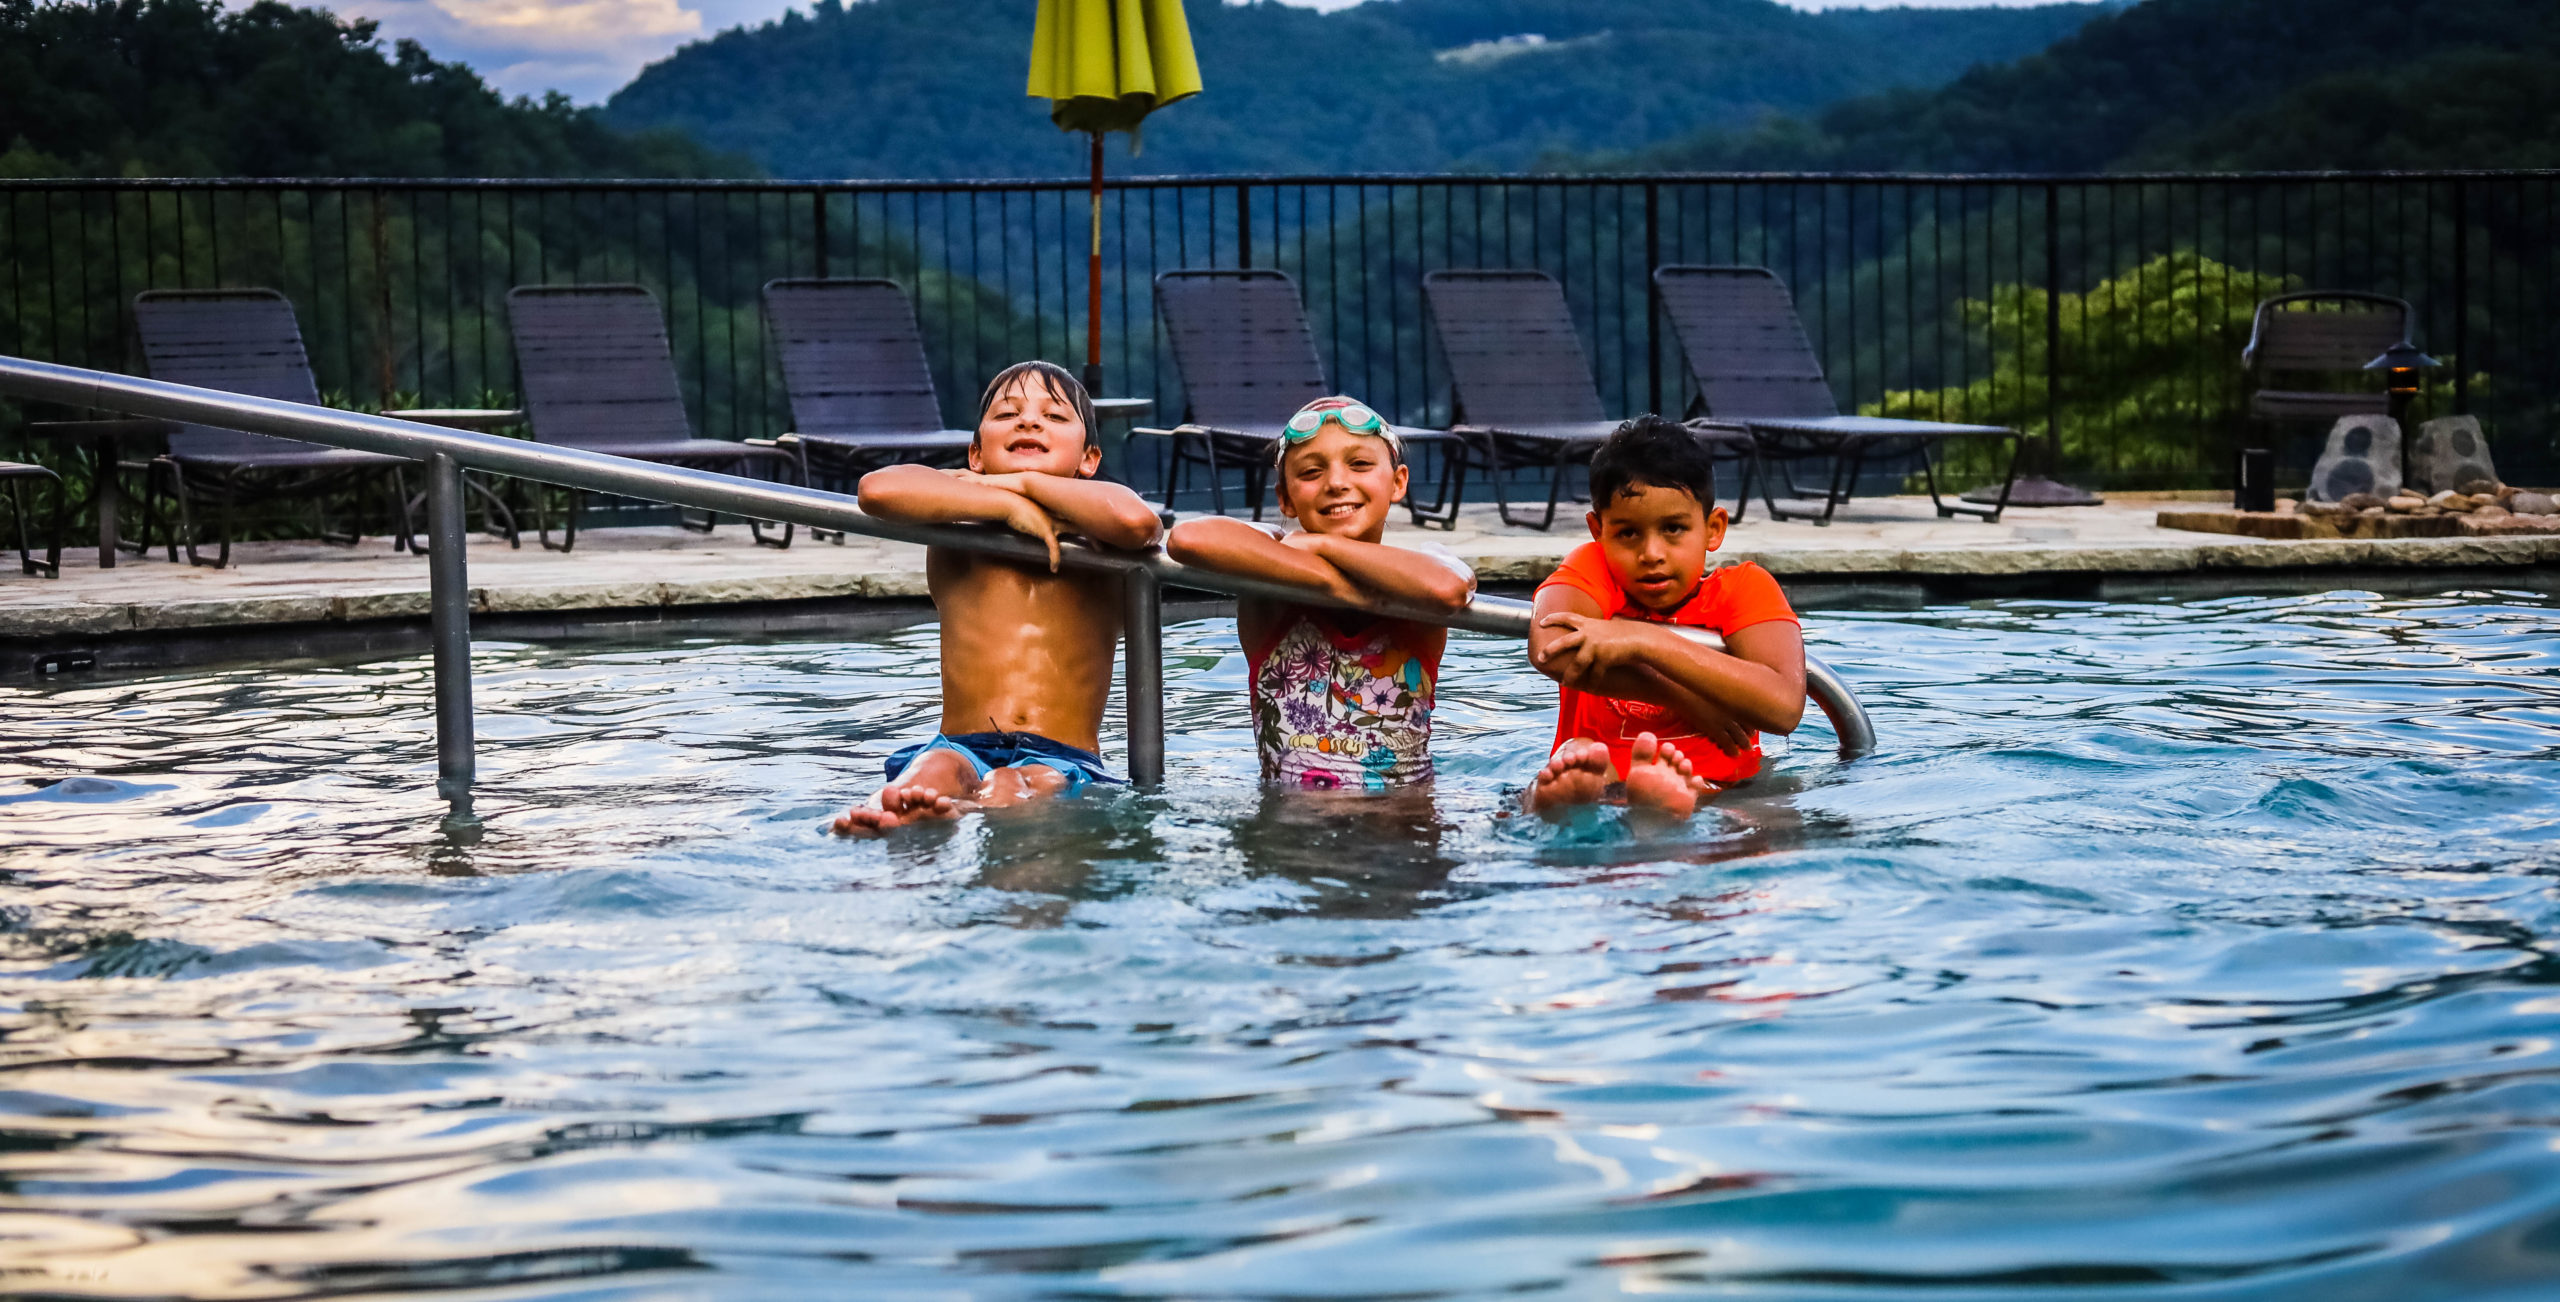 Children in a pool.